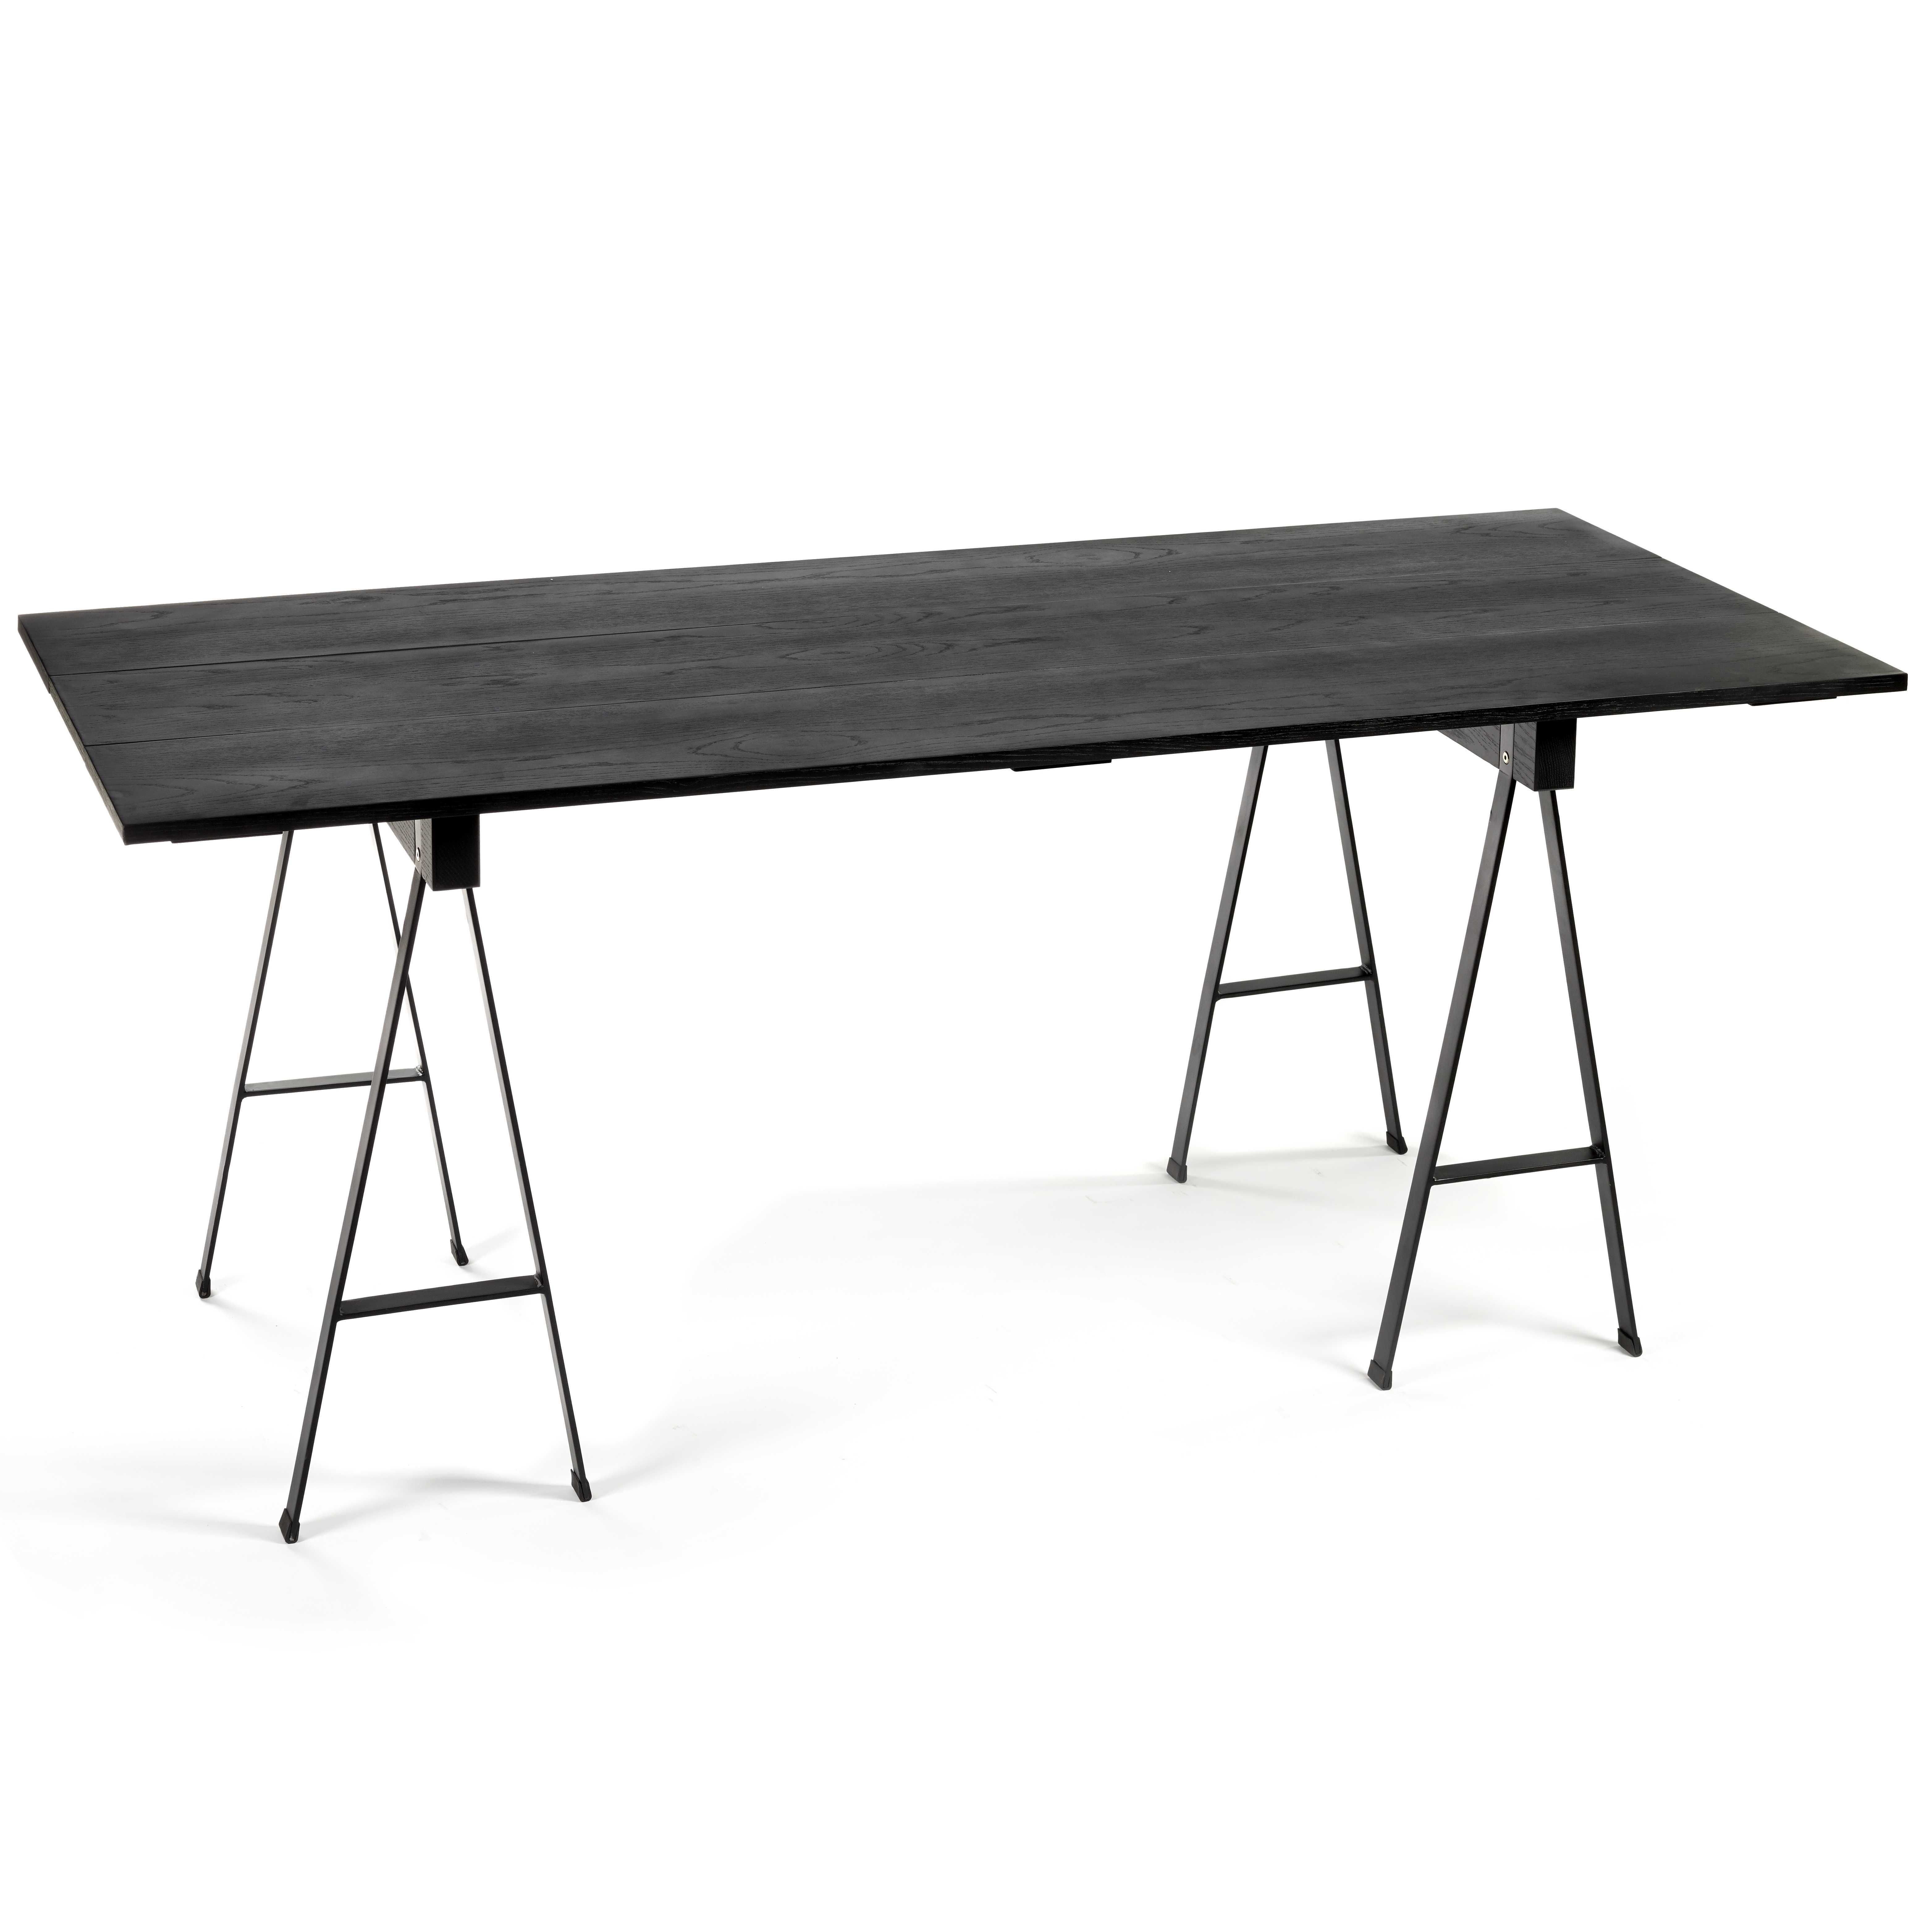 Serax Daysign furniture by Studio Simple bureau 180x75 | Flinders